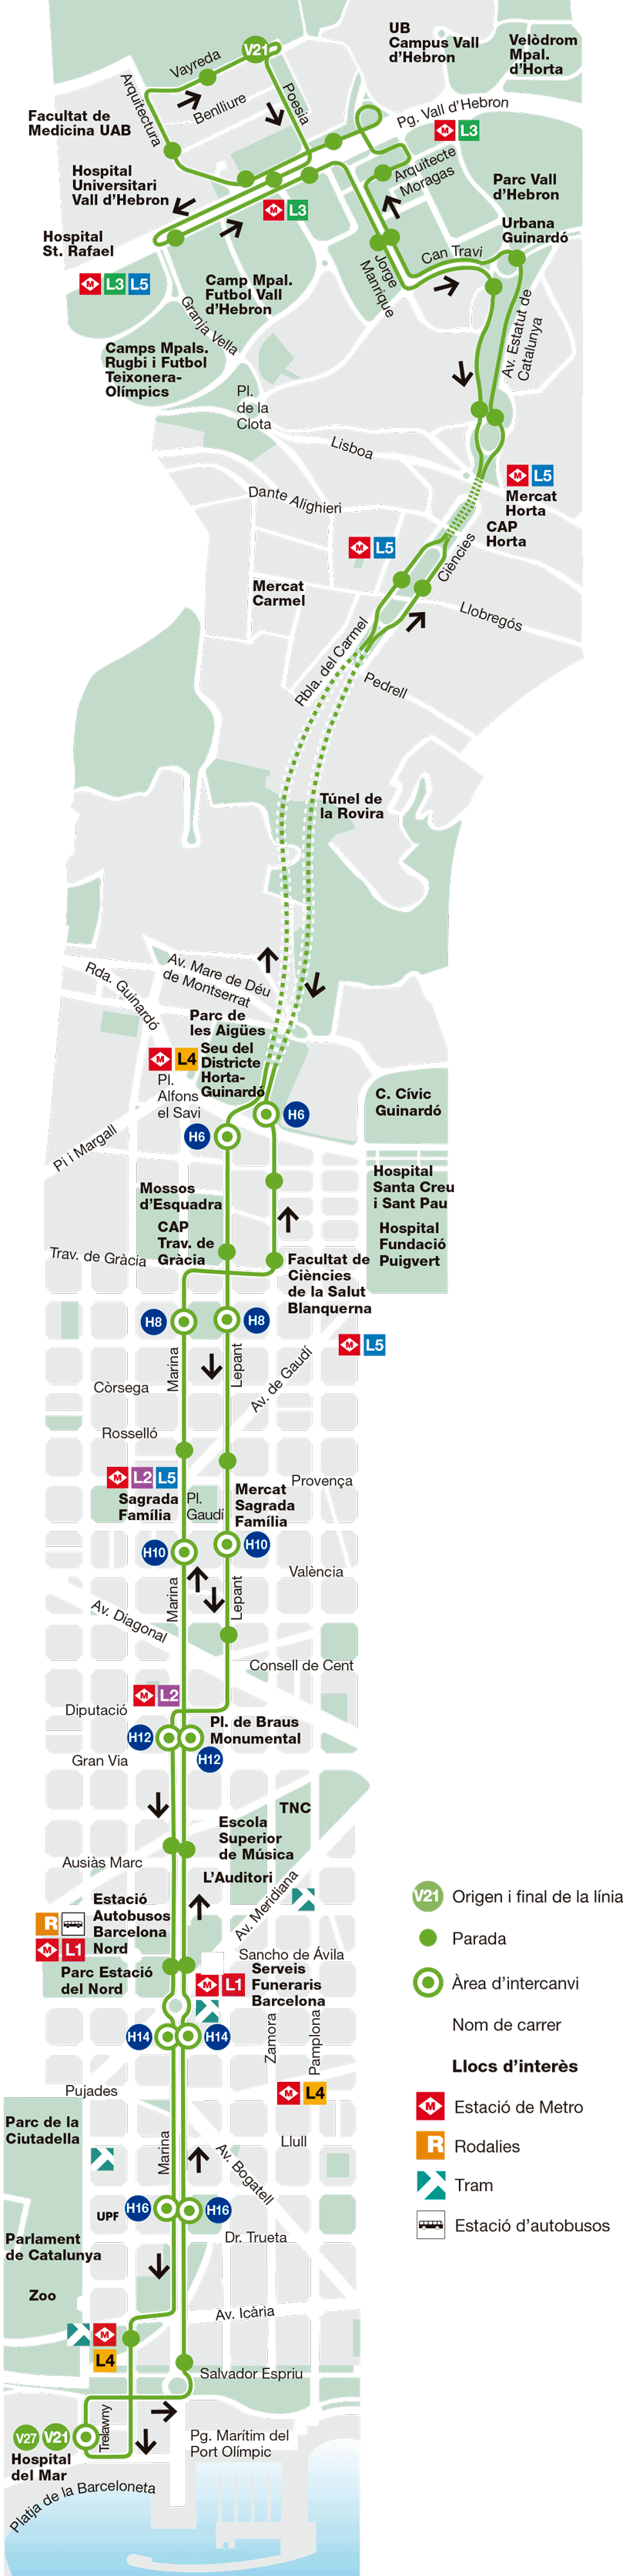 Barcelona bus map line V21 2014